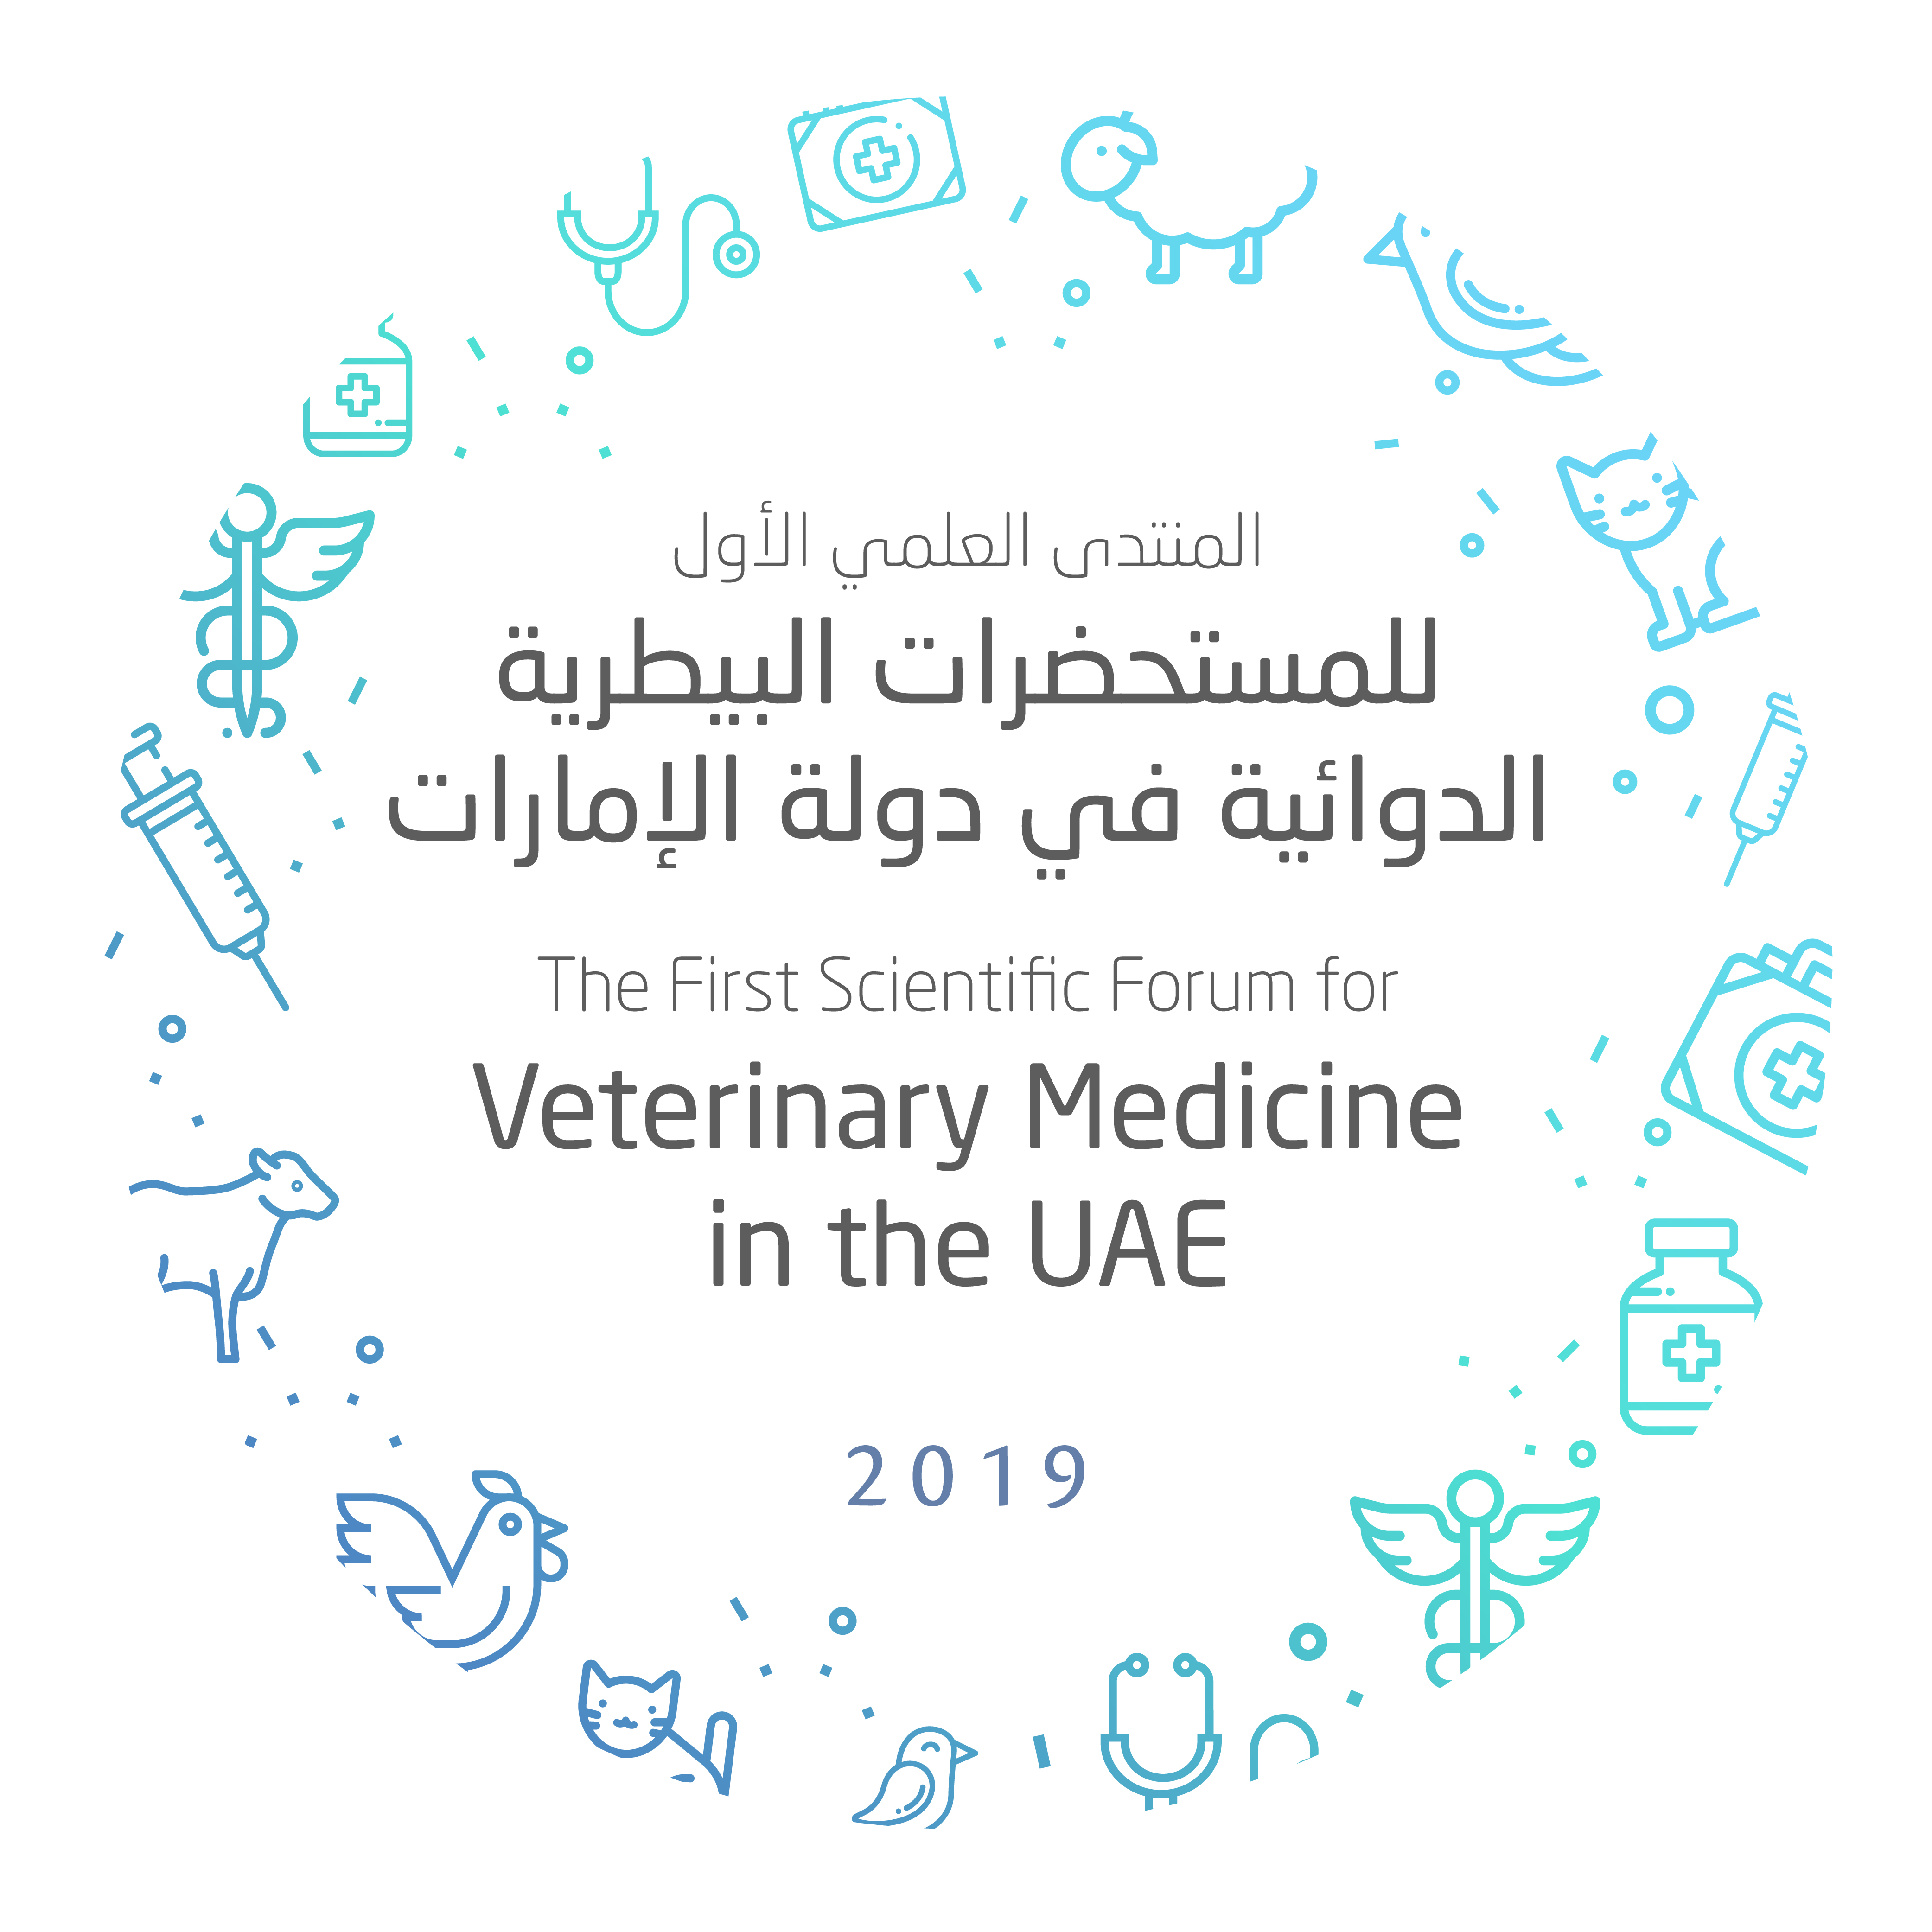 The first scientific forum for Veterinary Medicine in the UAE